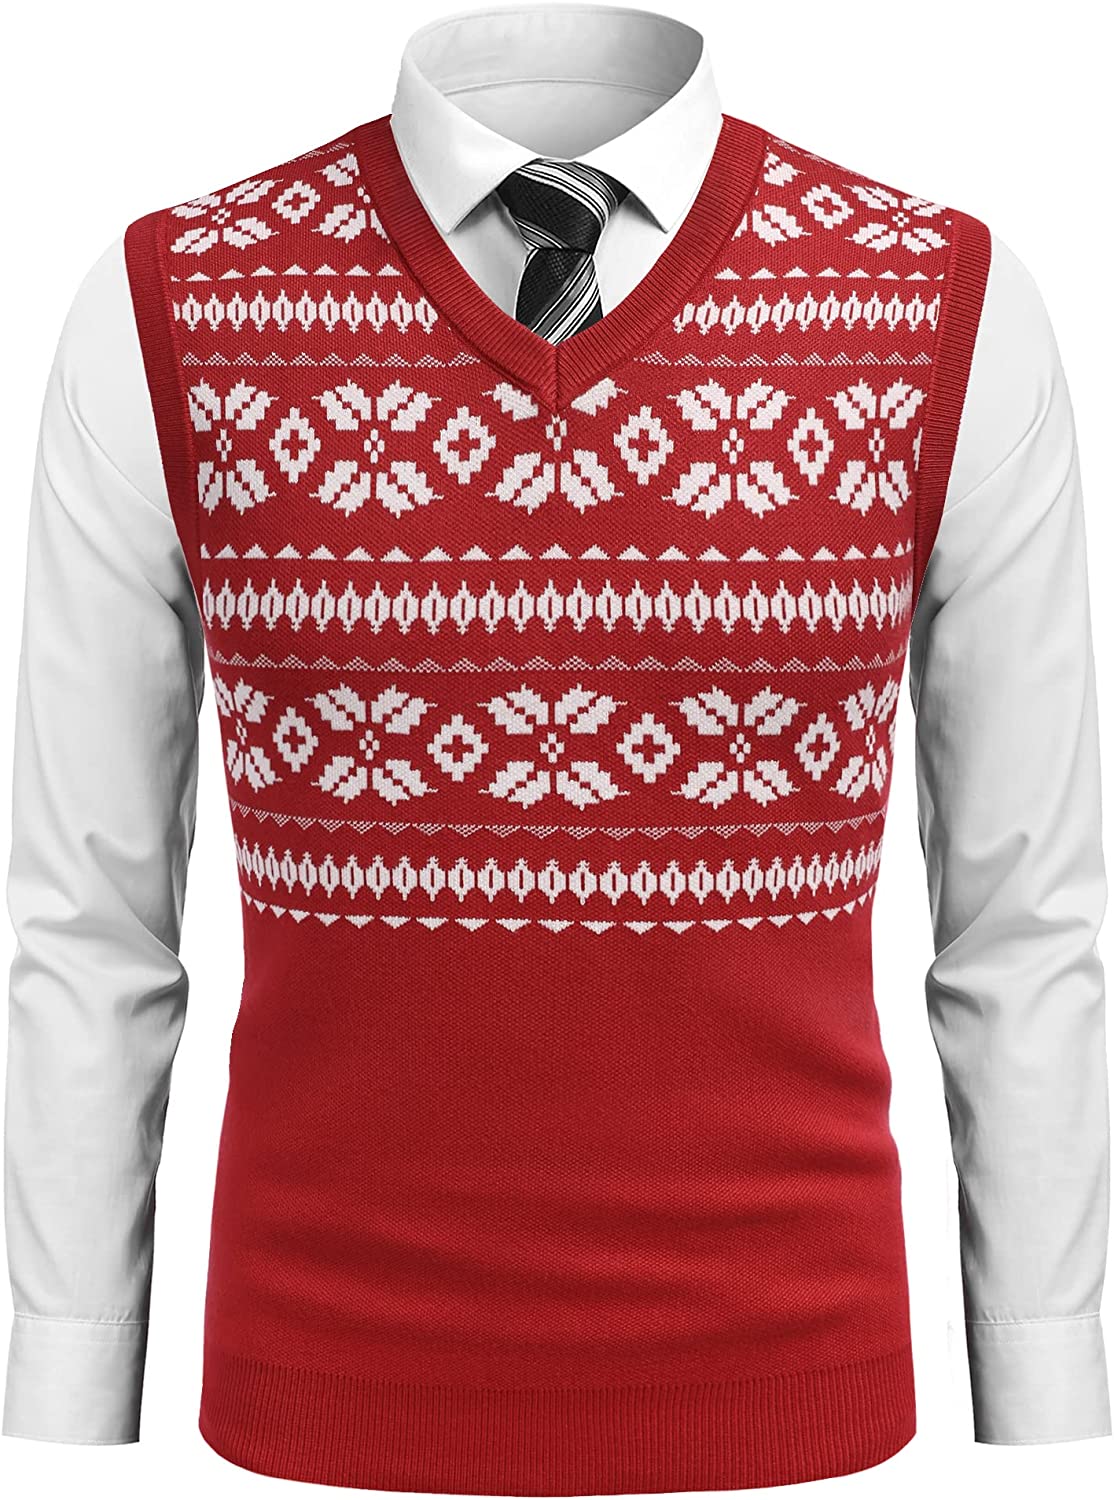 Men Cotton Solid, V Neck, Pullover Knitted Sleeveless Sweater Vest